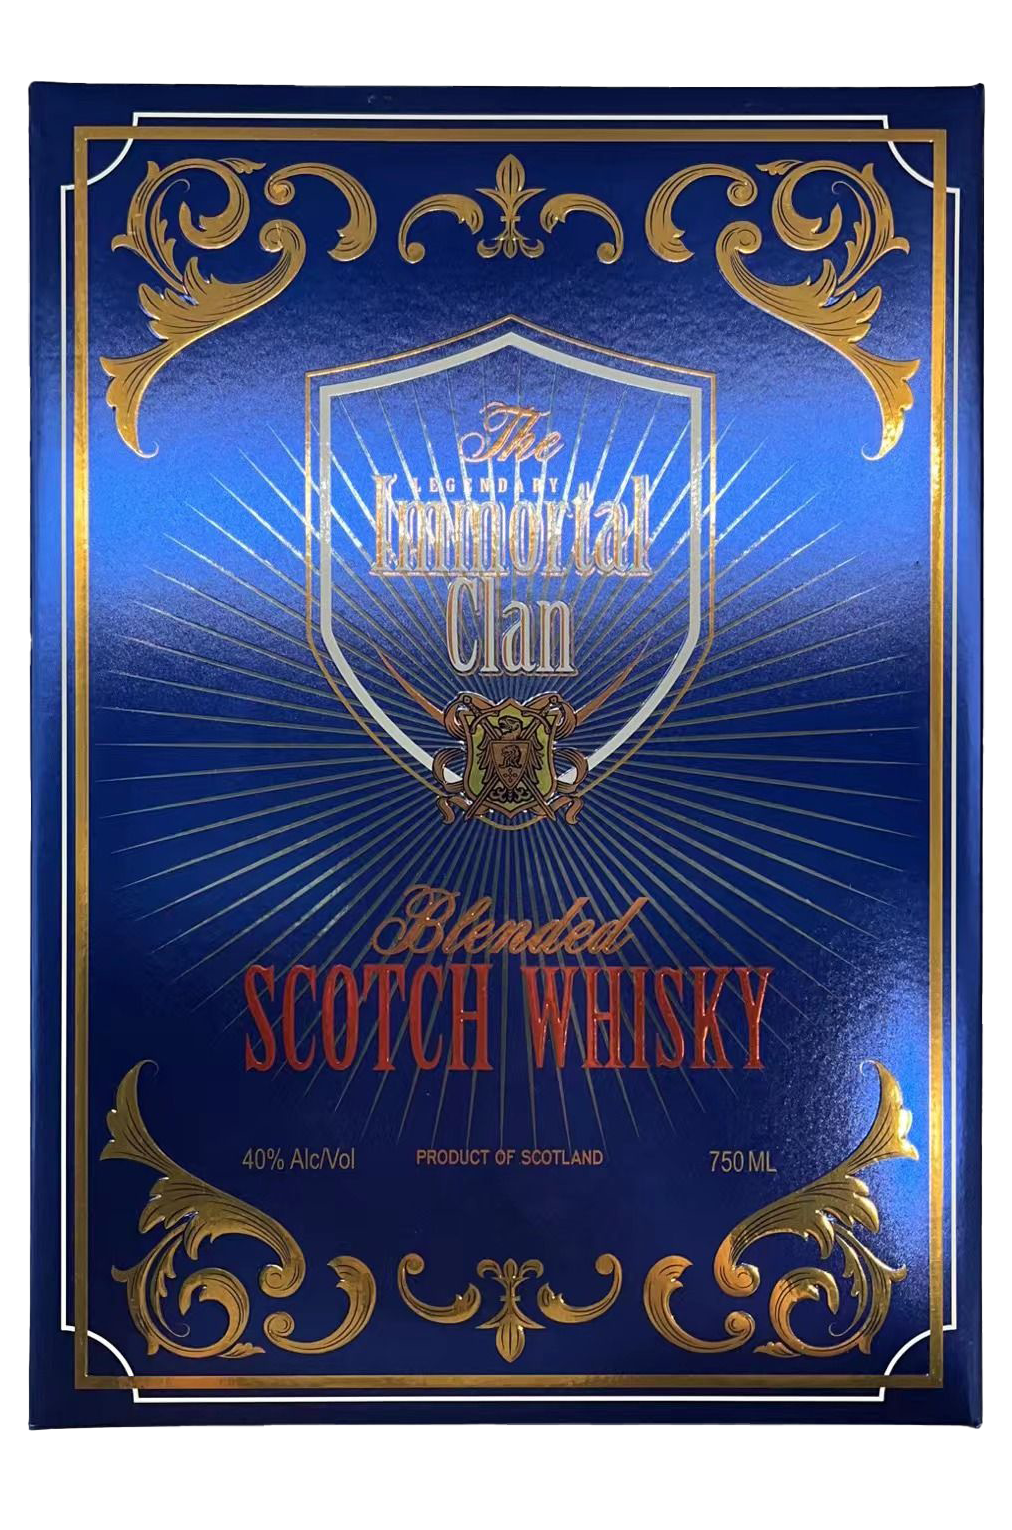 Immortal Clan Scotch Whisky